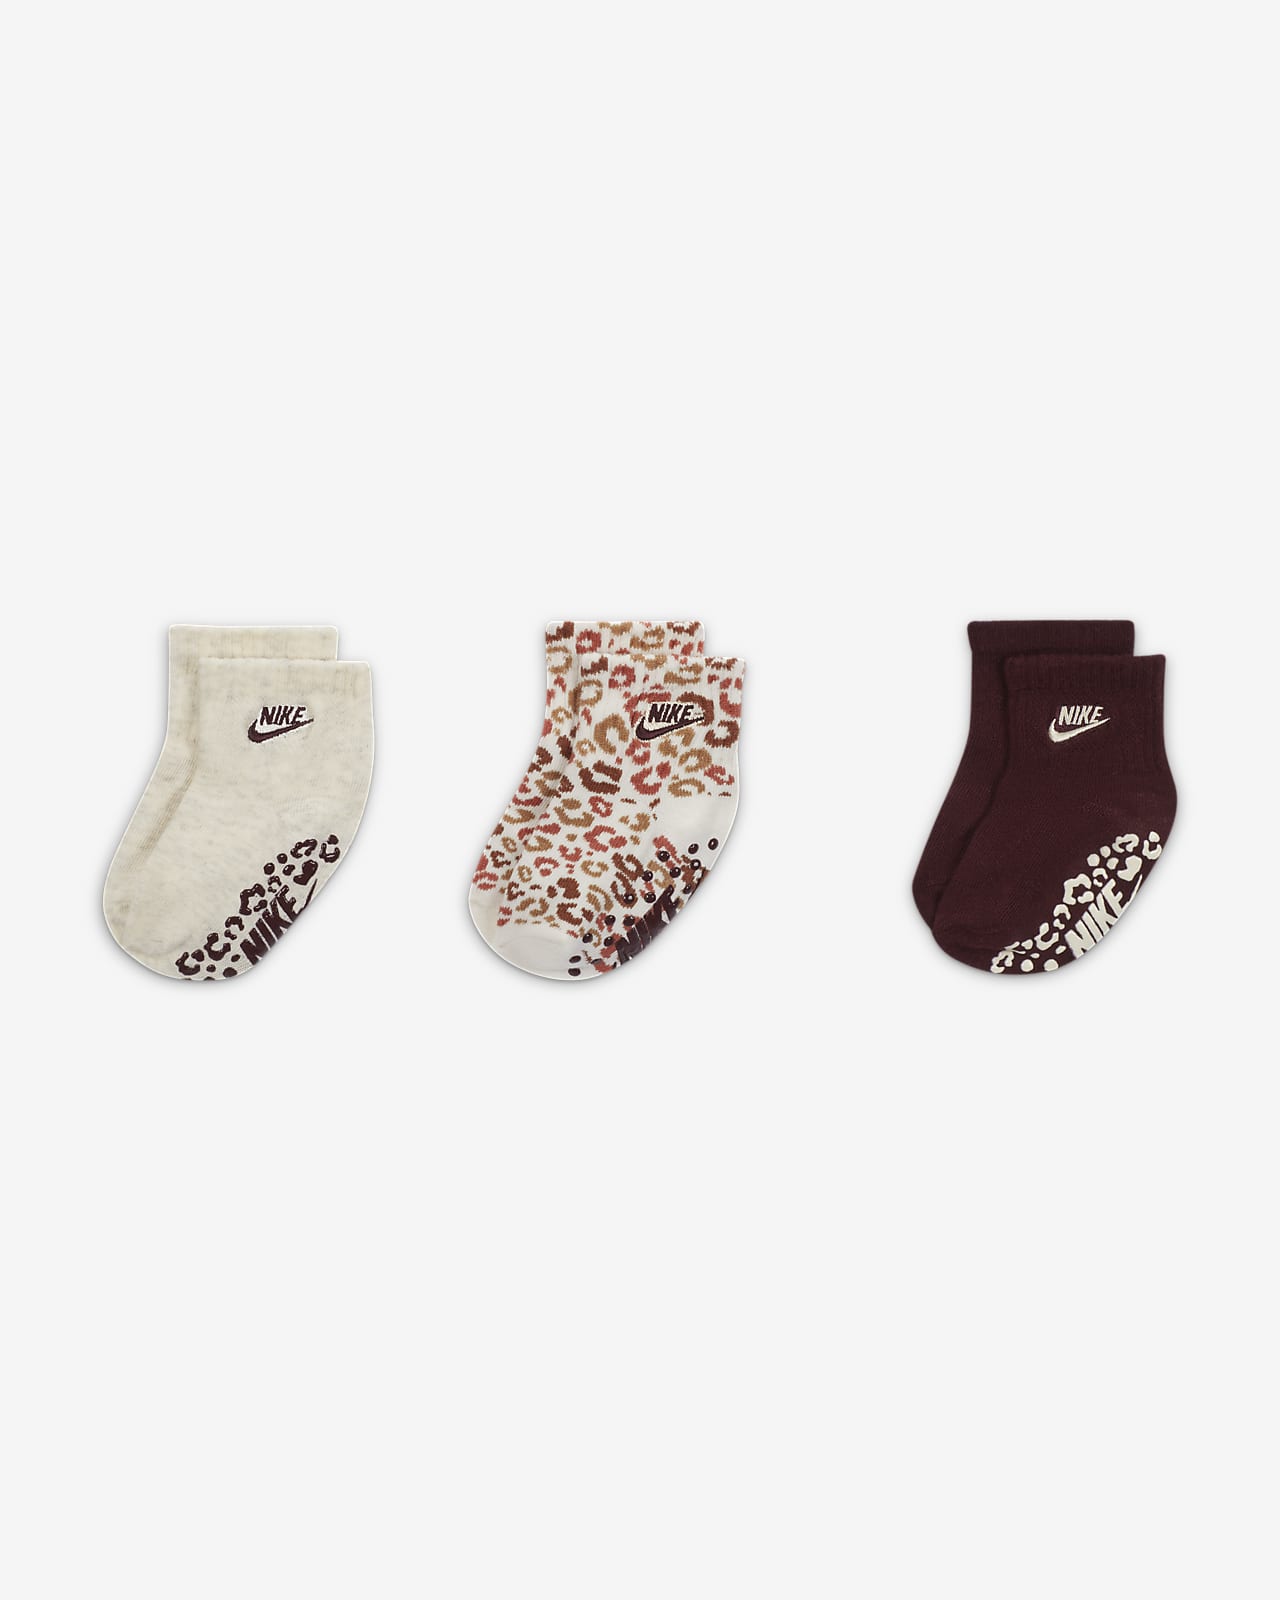 Nike Leopard Gripper Socks Box Set (3 Pairs) Baby (12-24M)/Toddler Socks